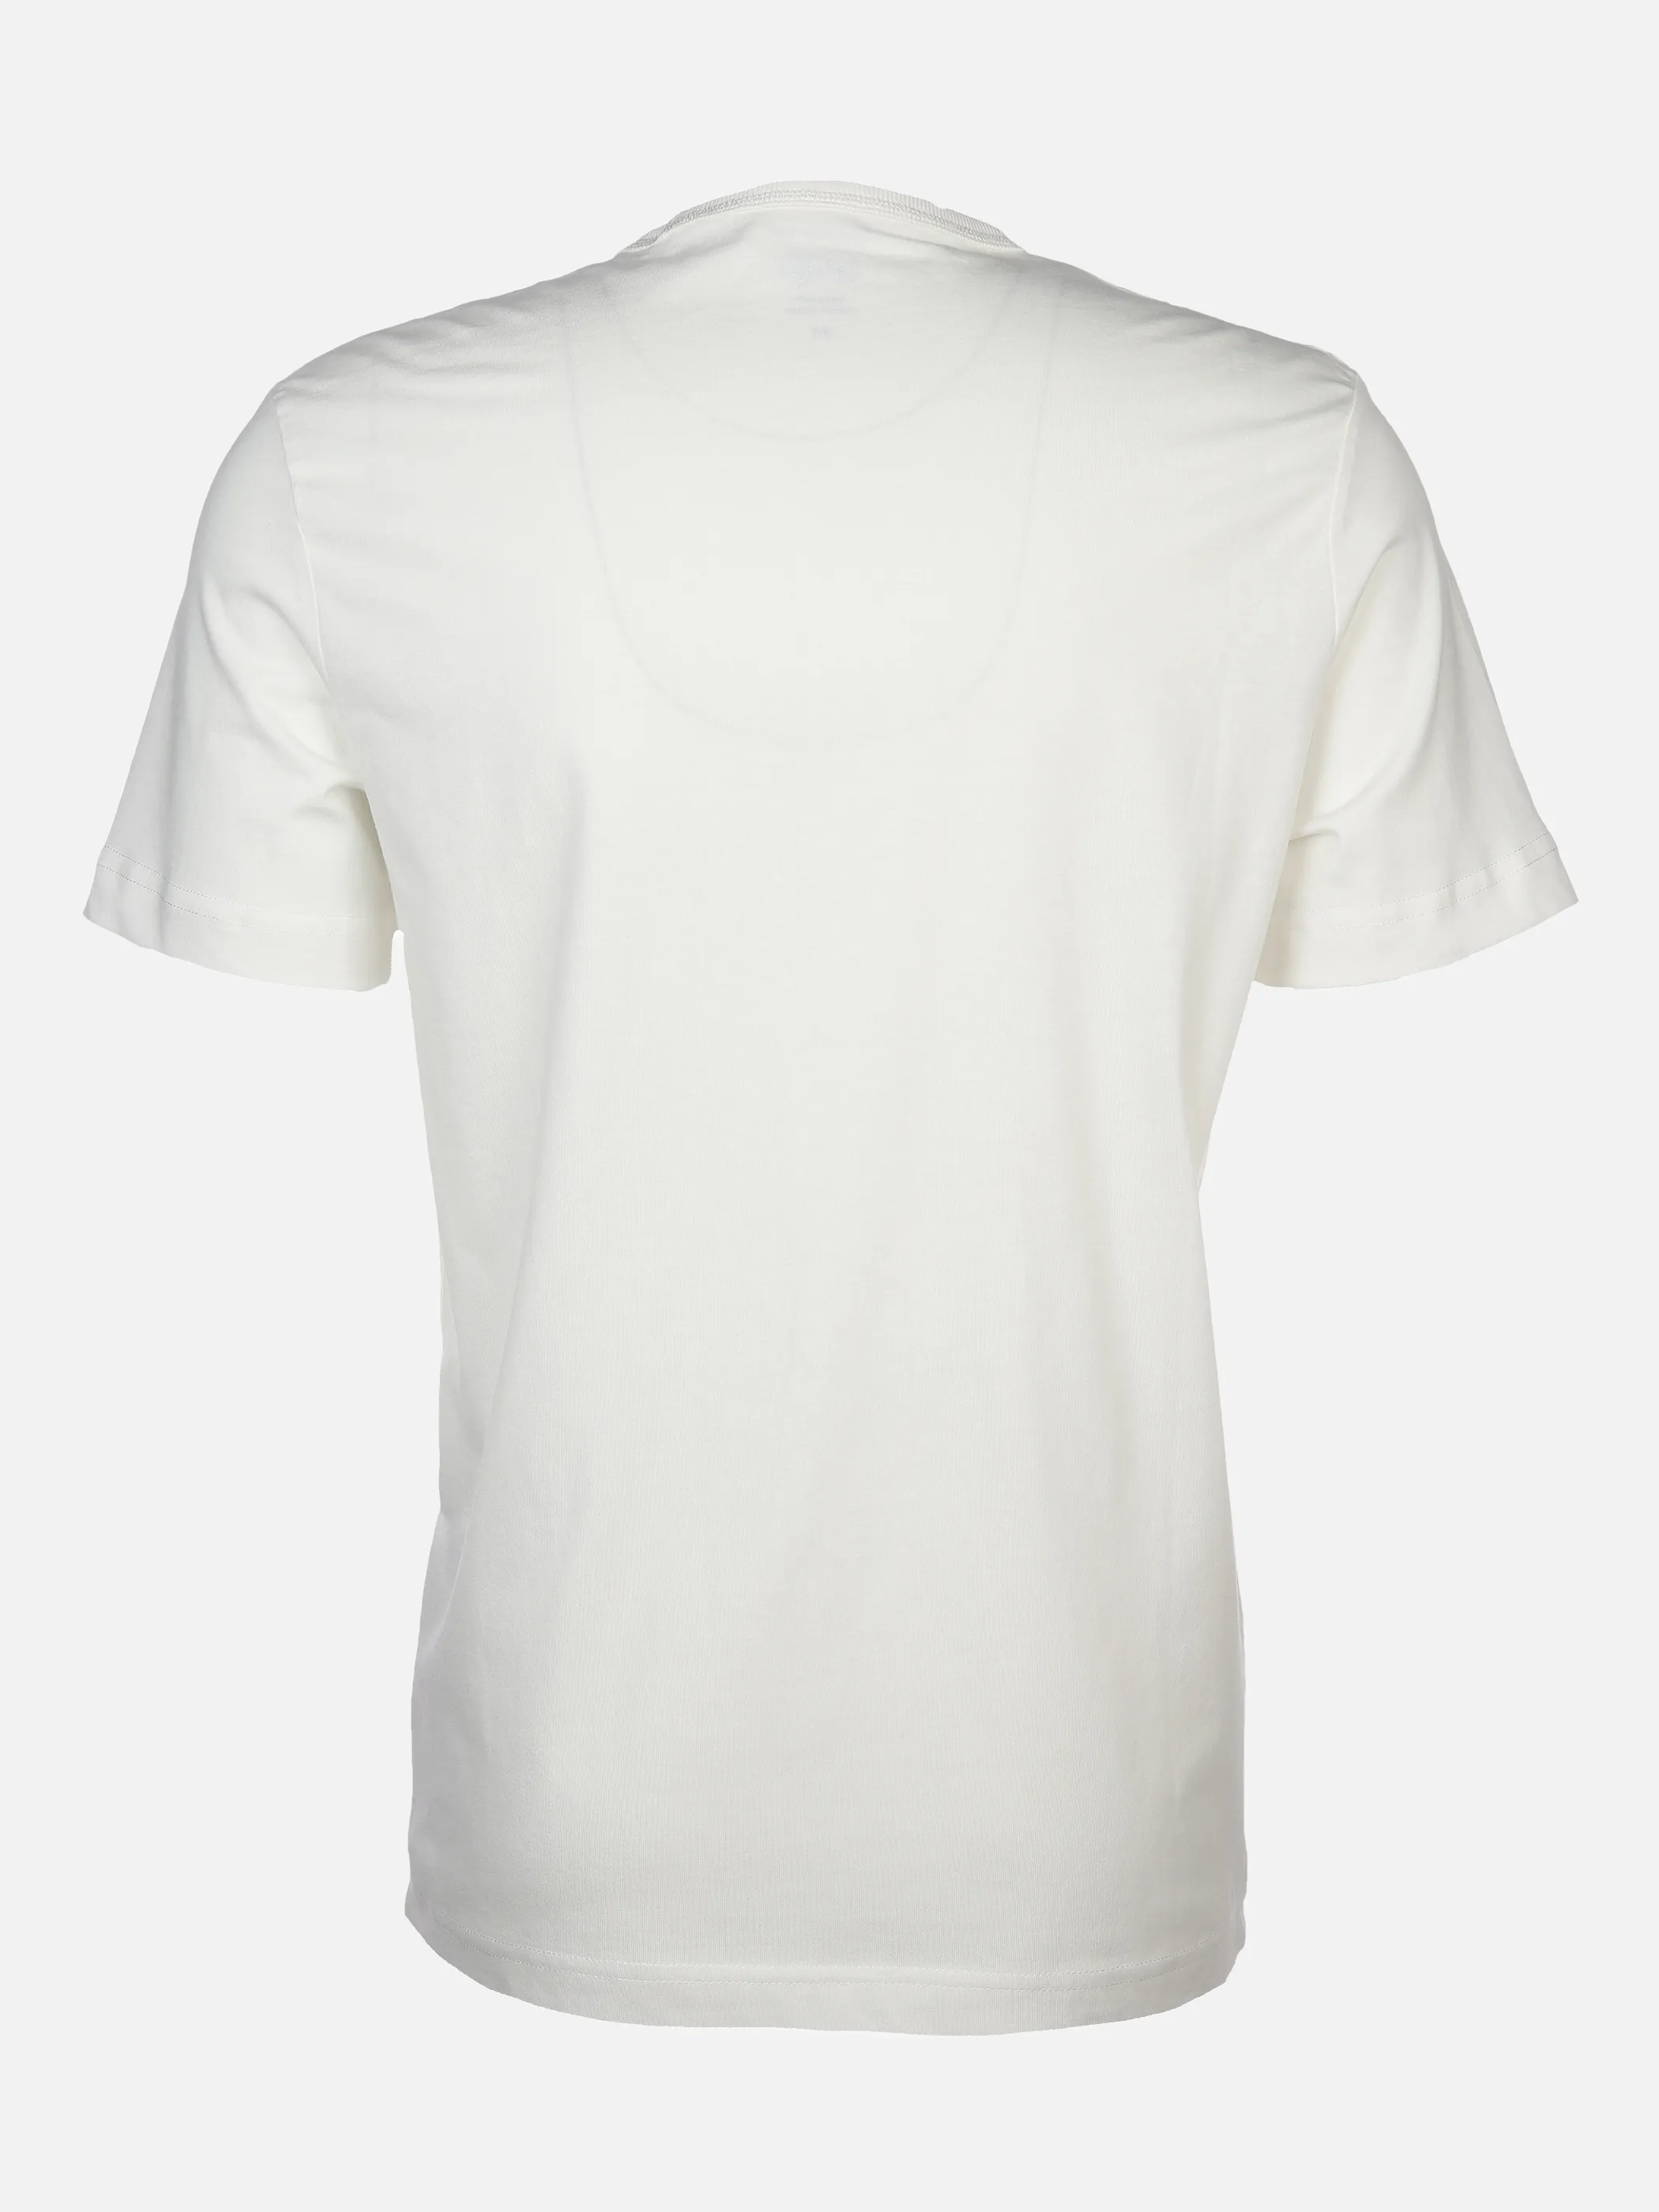 Tom Tailor 1036334 printed t-shirt Weiß 880544 10332 2